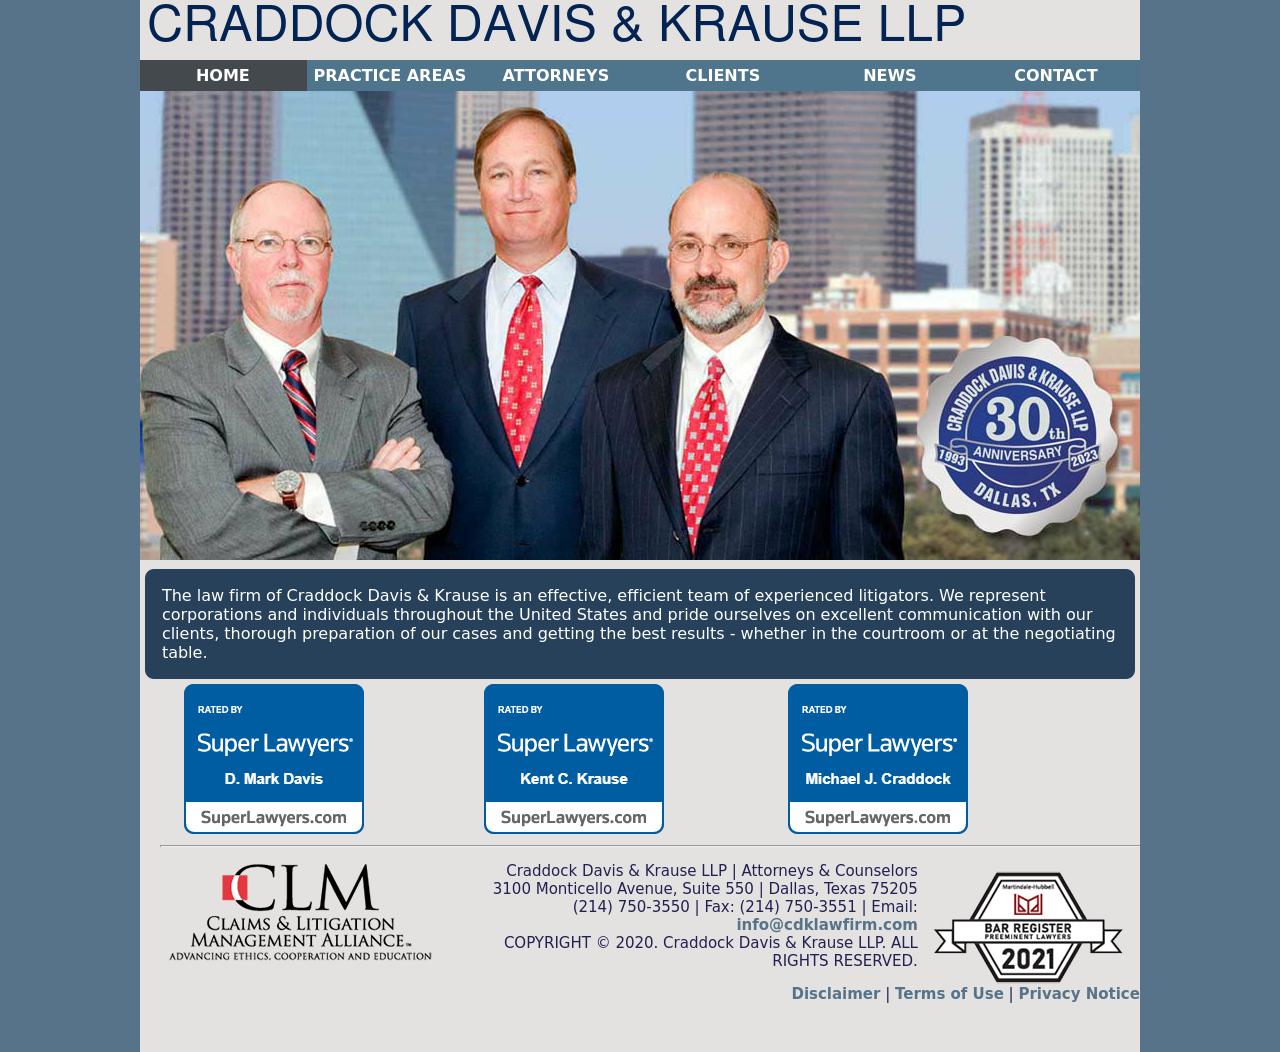 Craddock Davis & Krause LLP - Dallas TX Lawyers